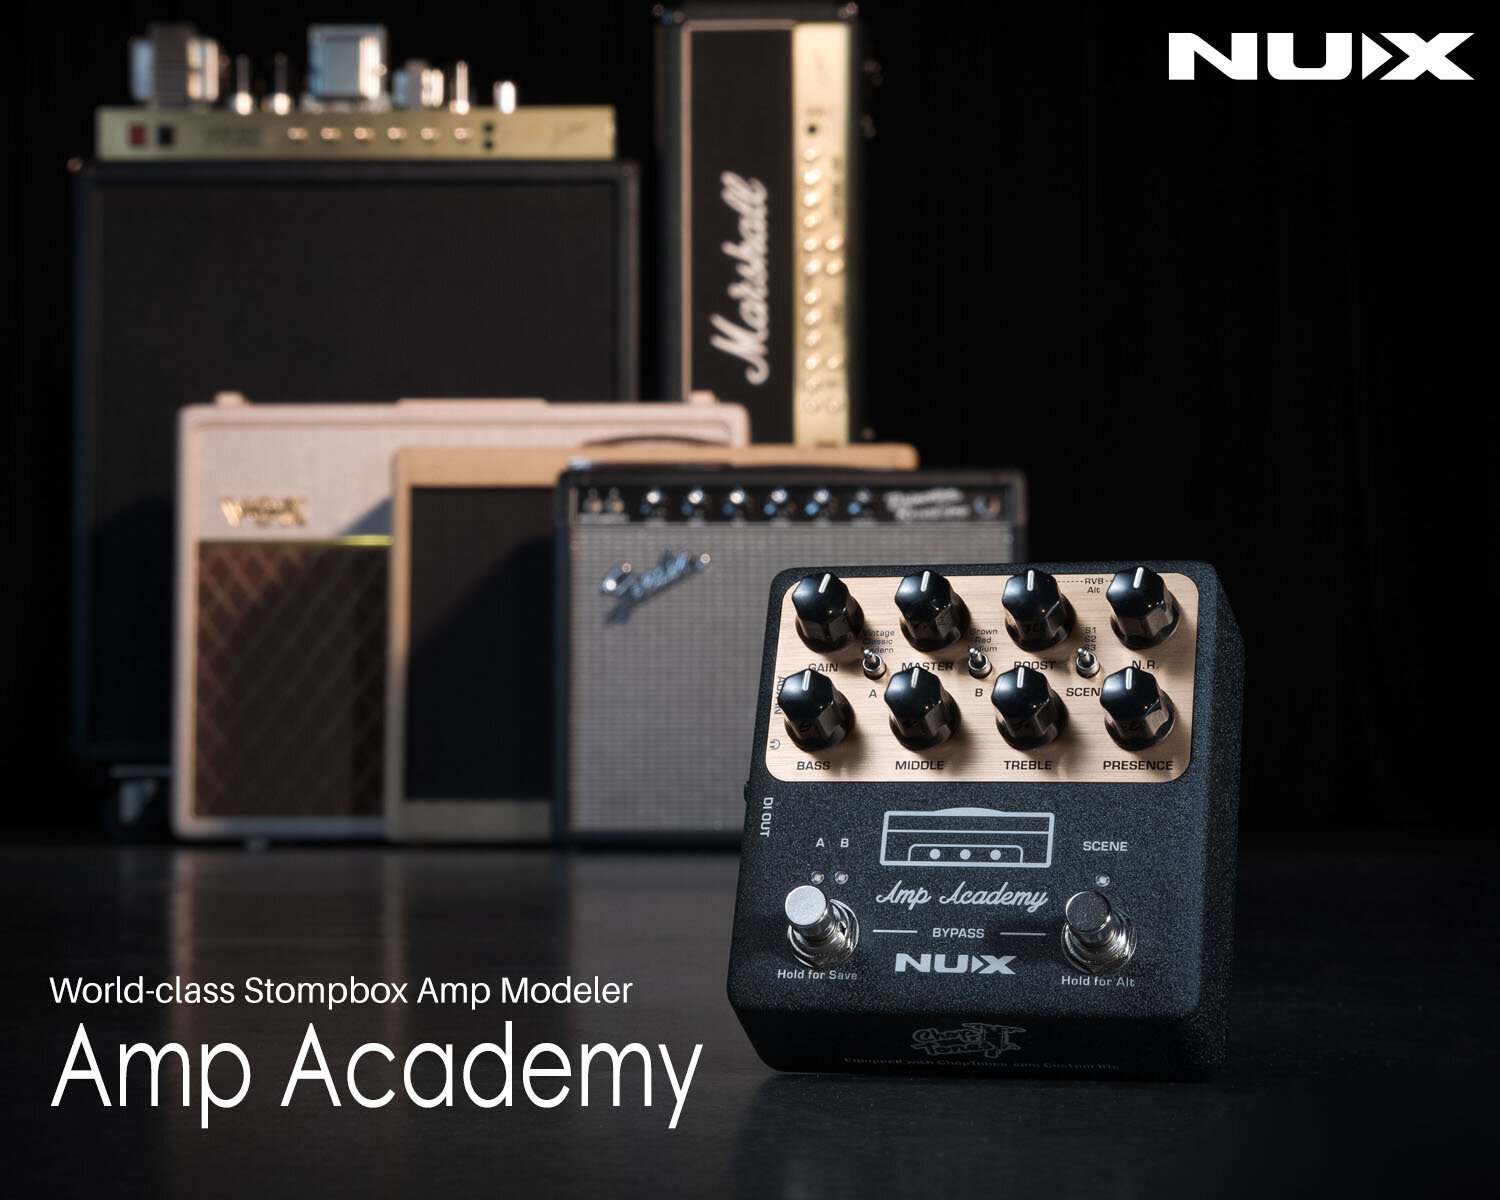 NUX Amp Academy